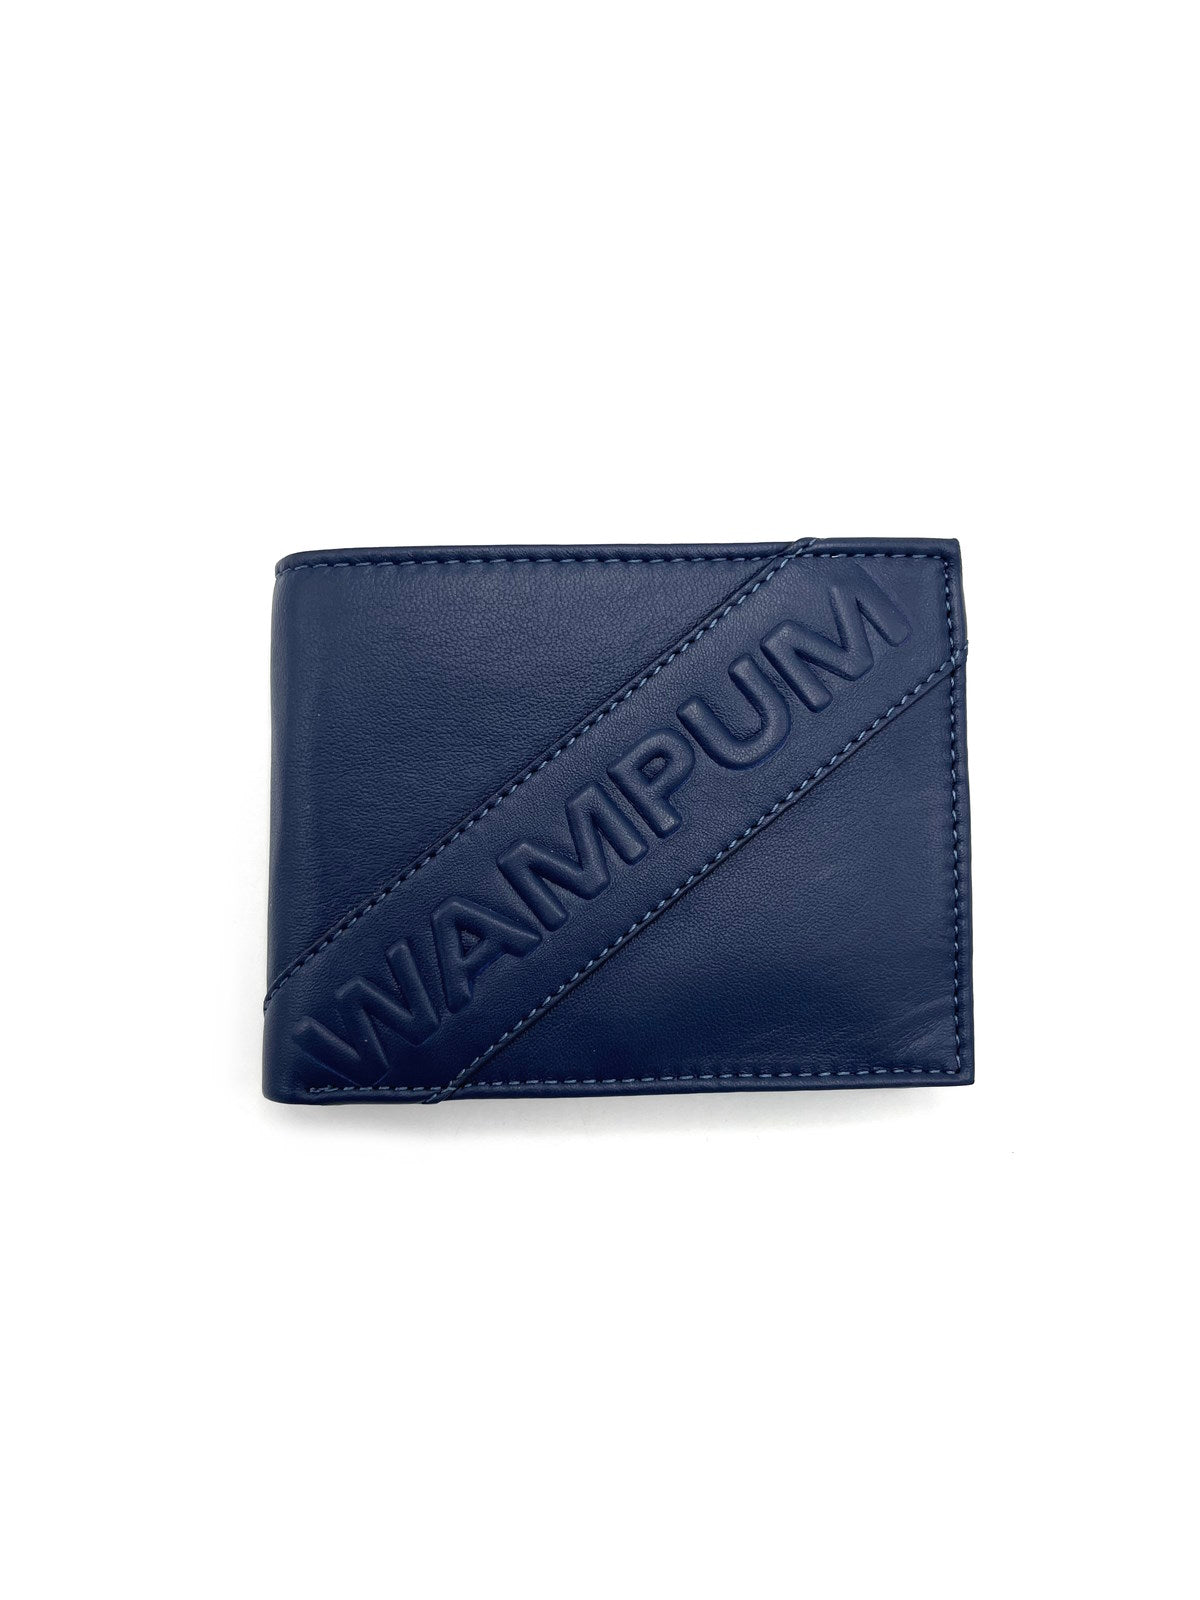 Brand Wampum, Genuine leather wallet, for men, art. PDK263-1.425